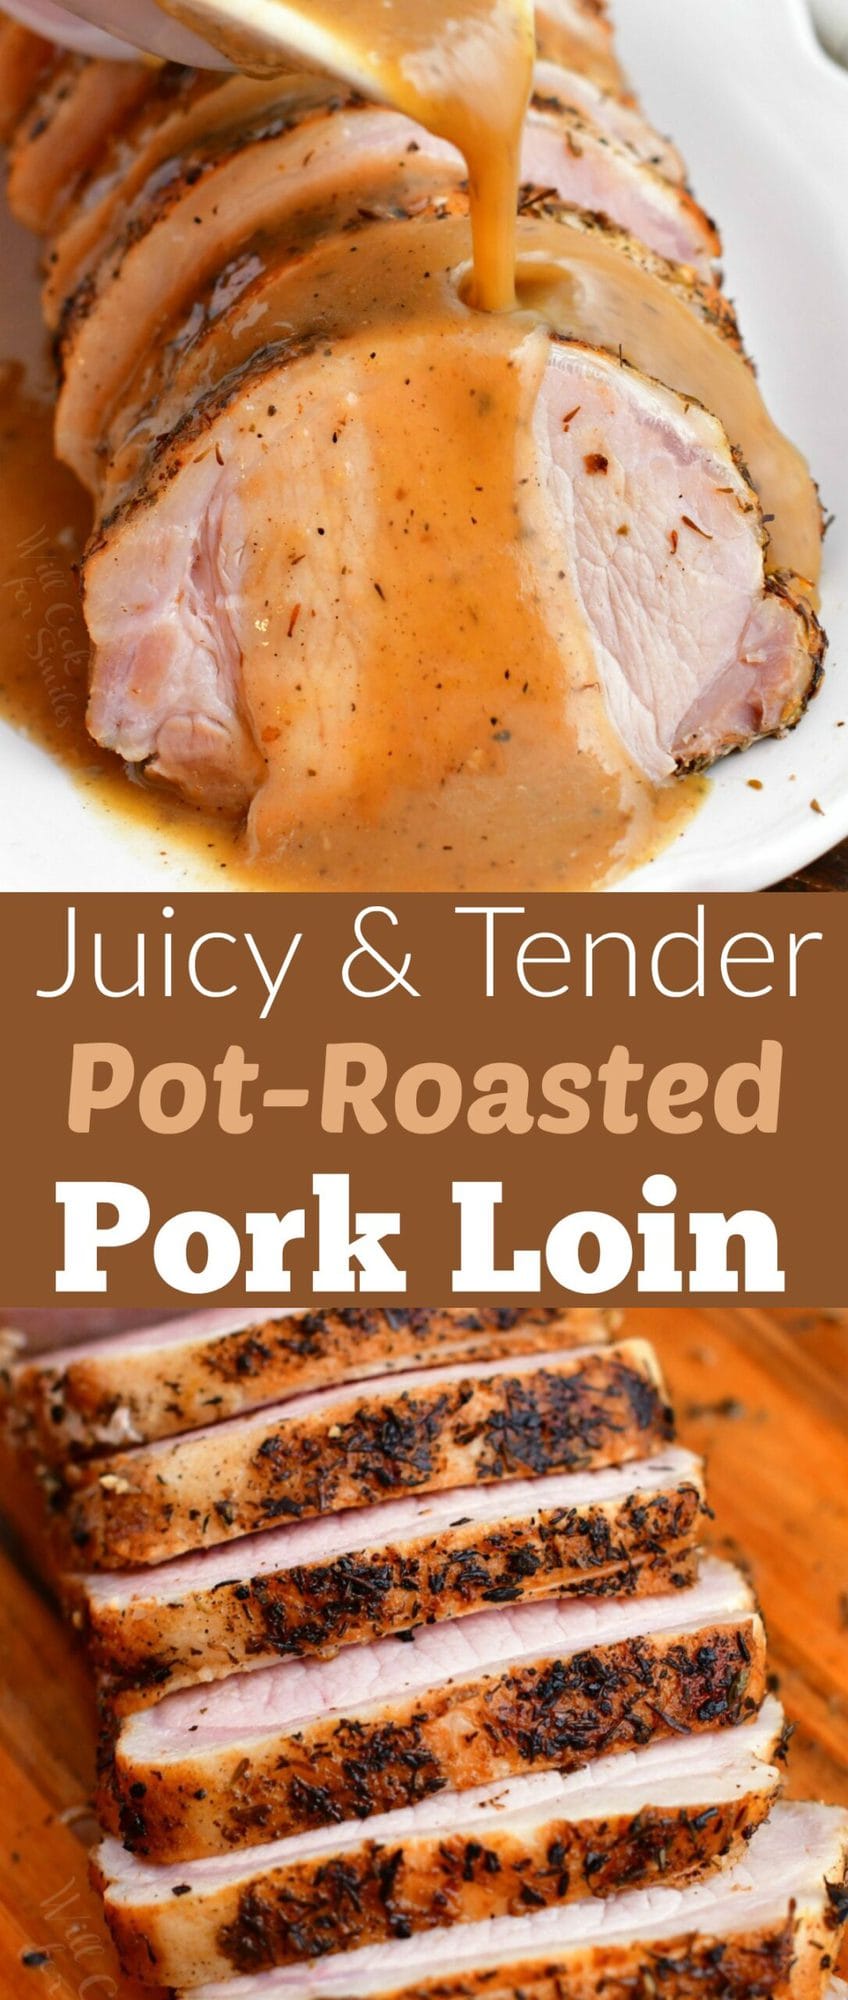 titled photo for Pinterest: Juicy & Tender Pot-Roasted Pork Loin